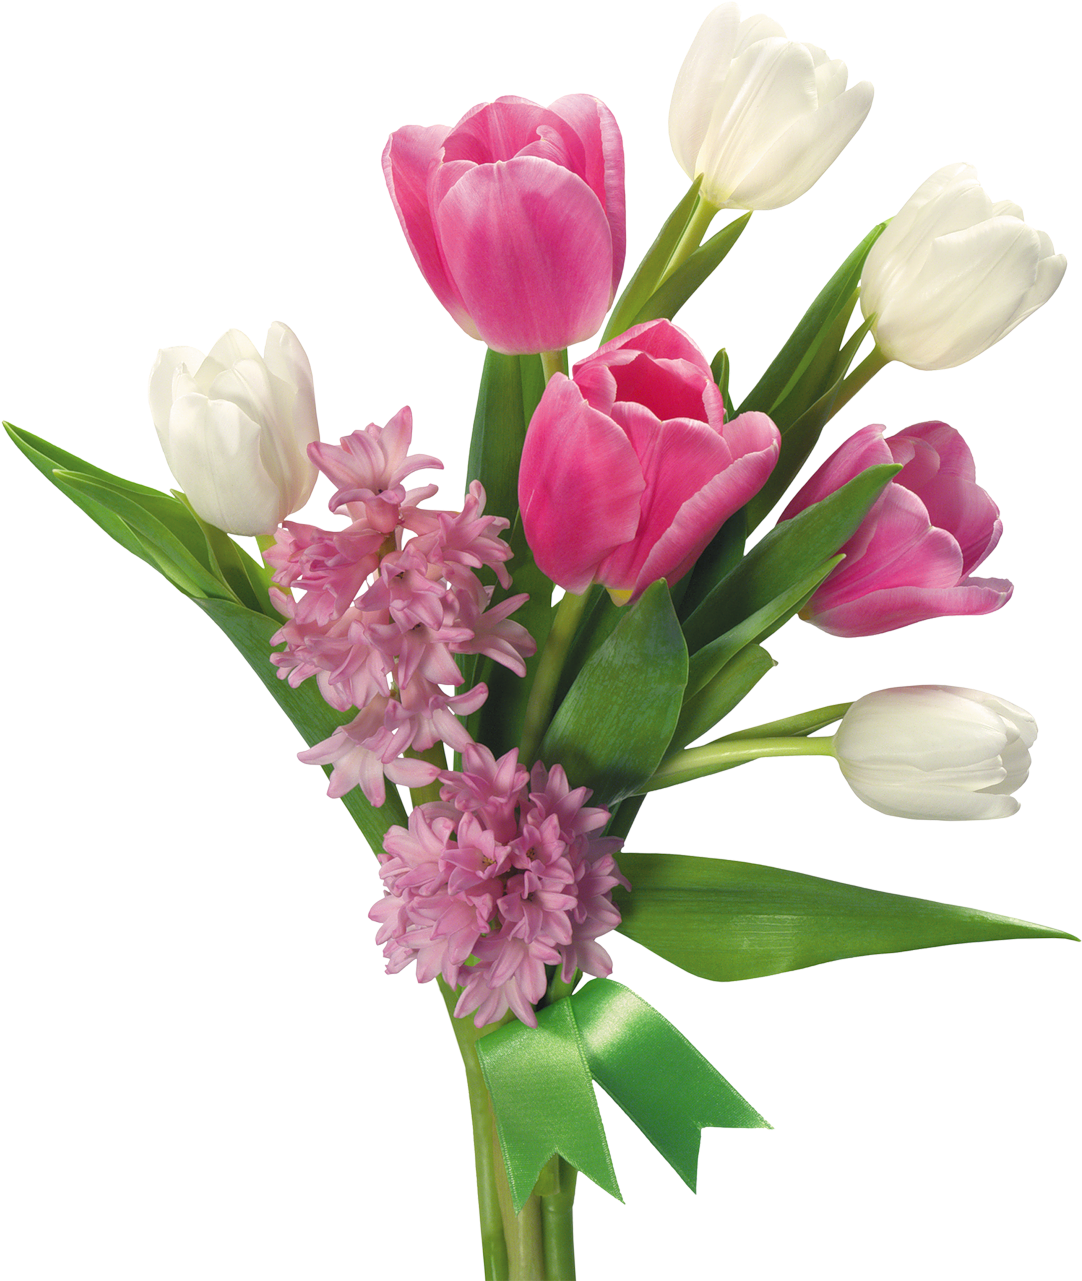 Flower Bokeh Images Png The Best Flowers Ideas - Flower Bouquet Transparent Background (1105x1294)